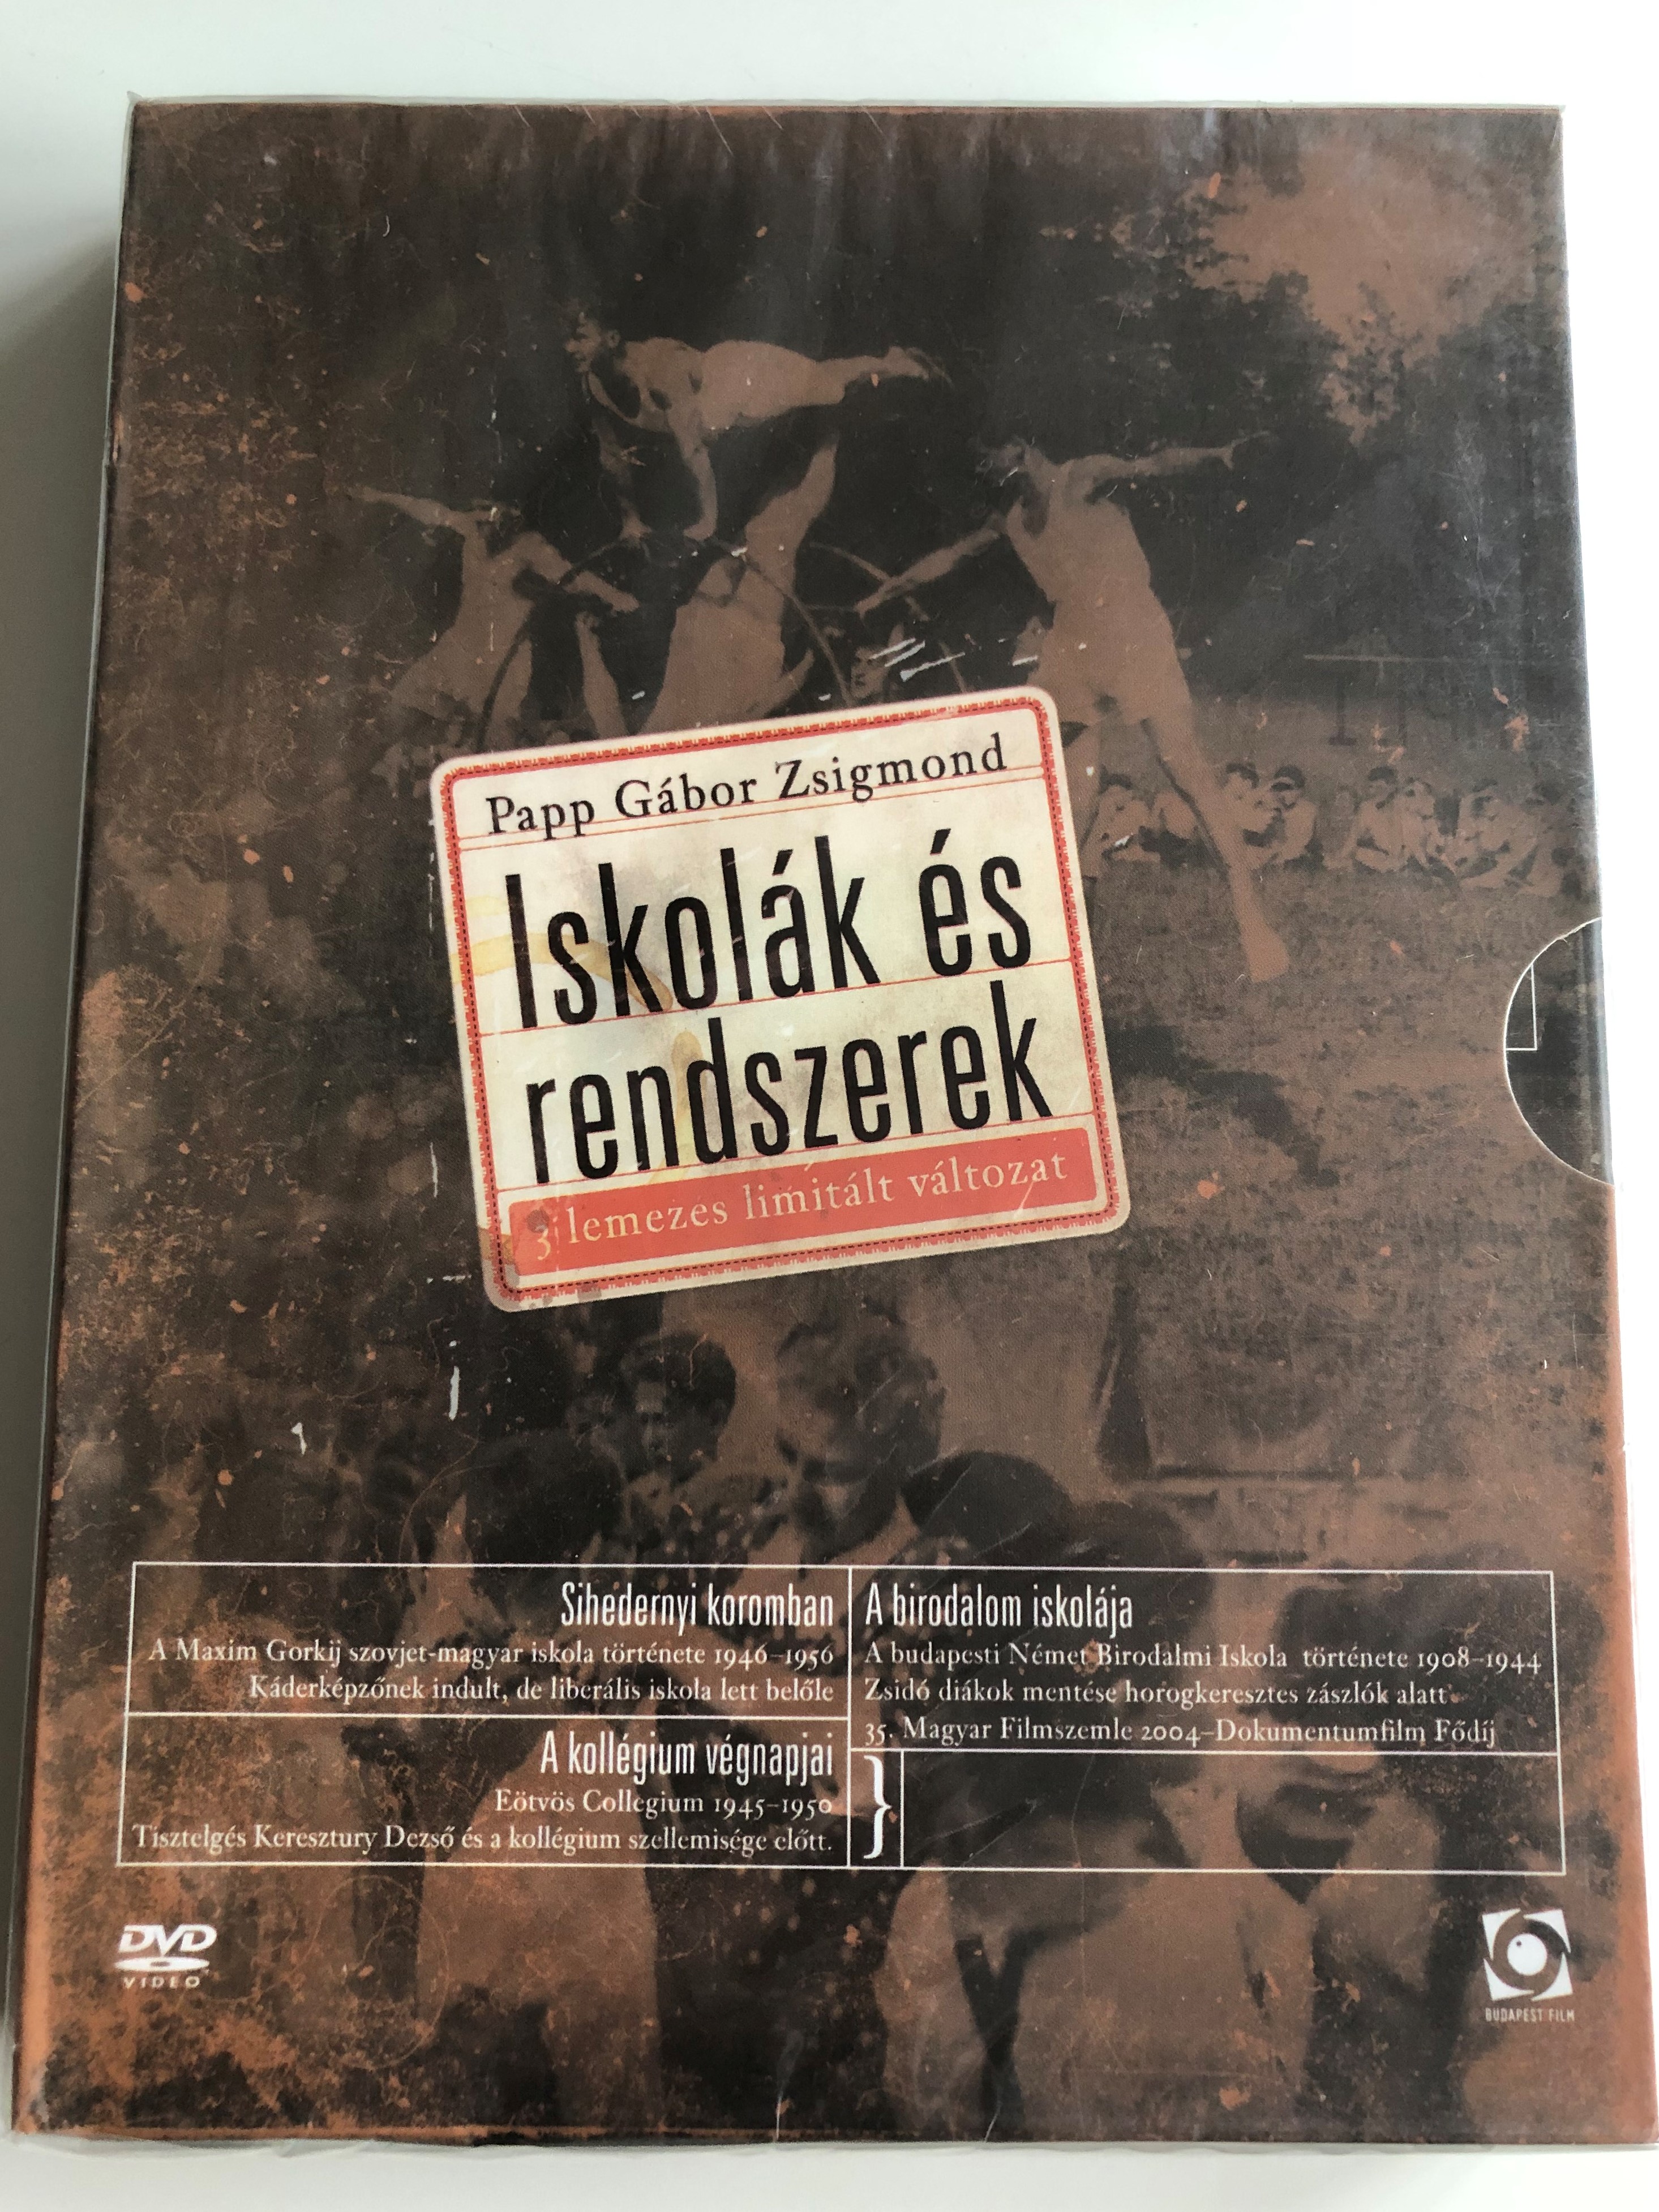 iskol-k-s-rendszerek-dvd-1996-2003-directed-by-papp-g-bor-zsigmond-1.jpg